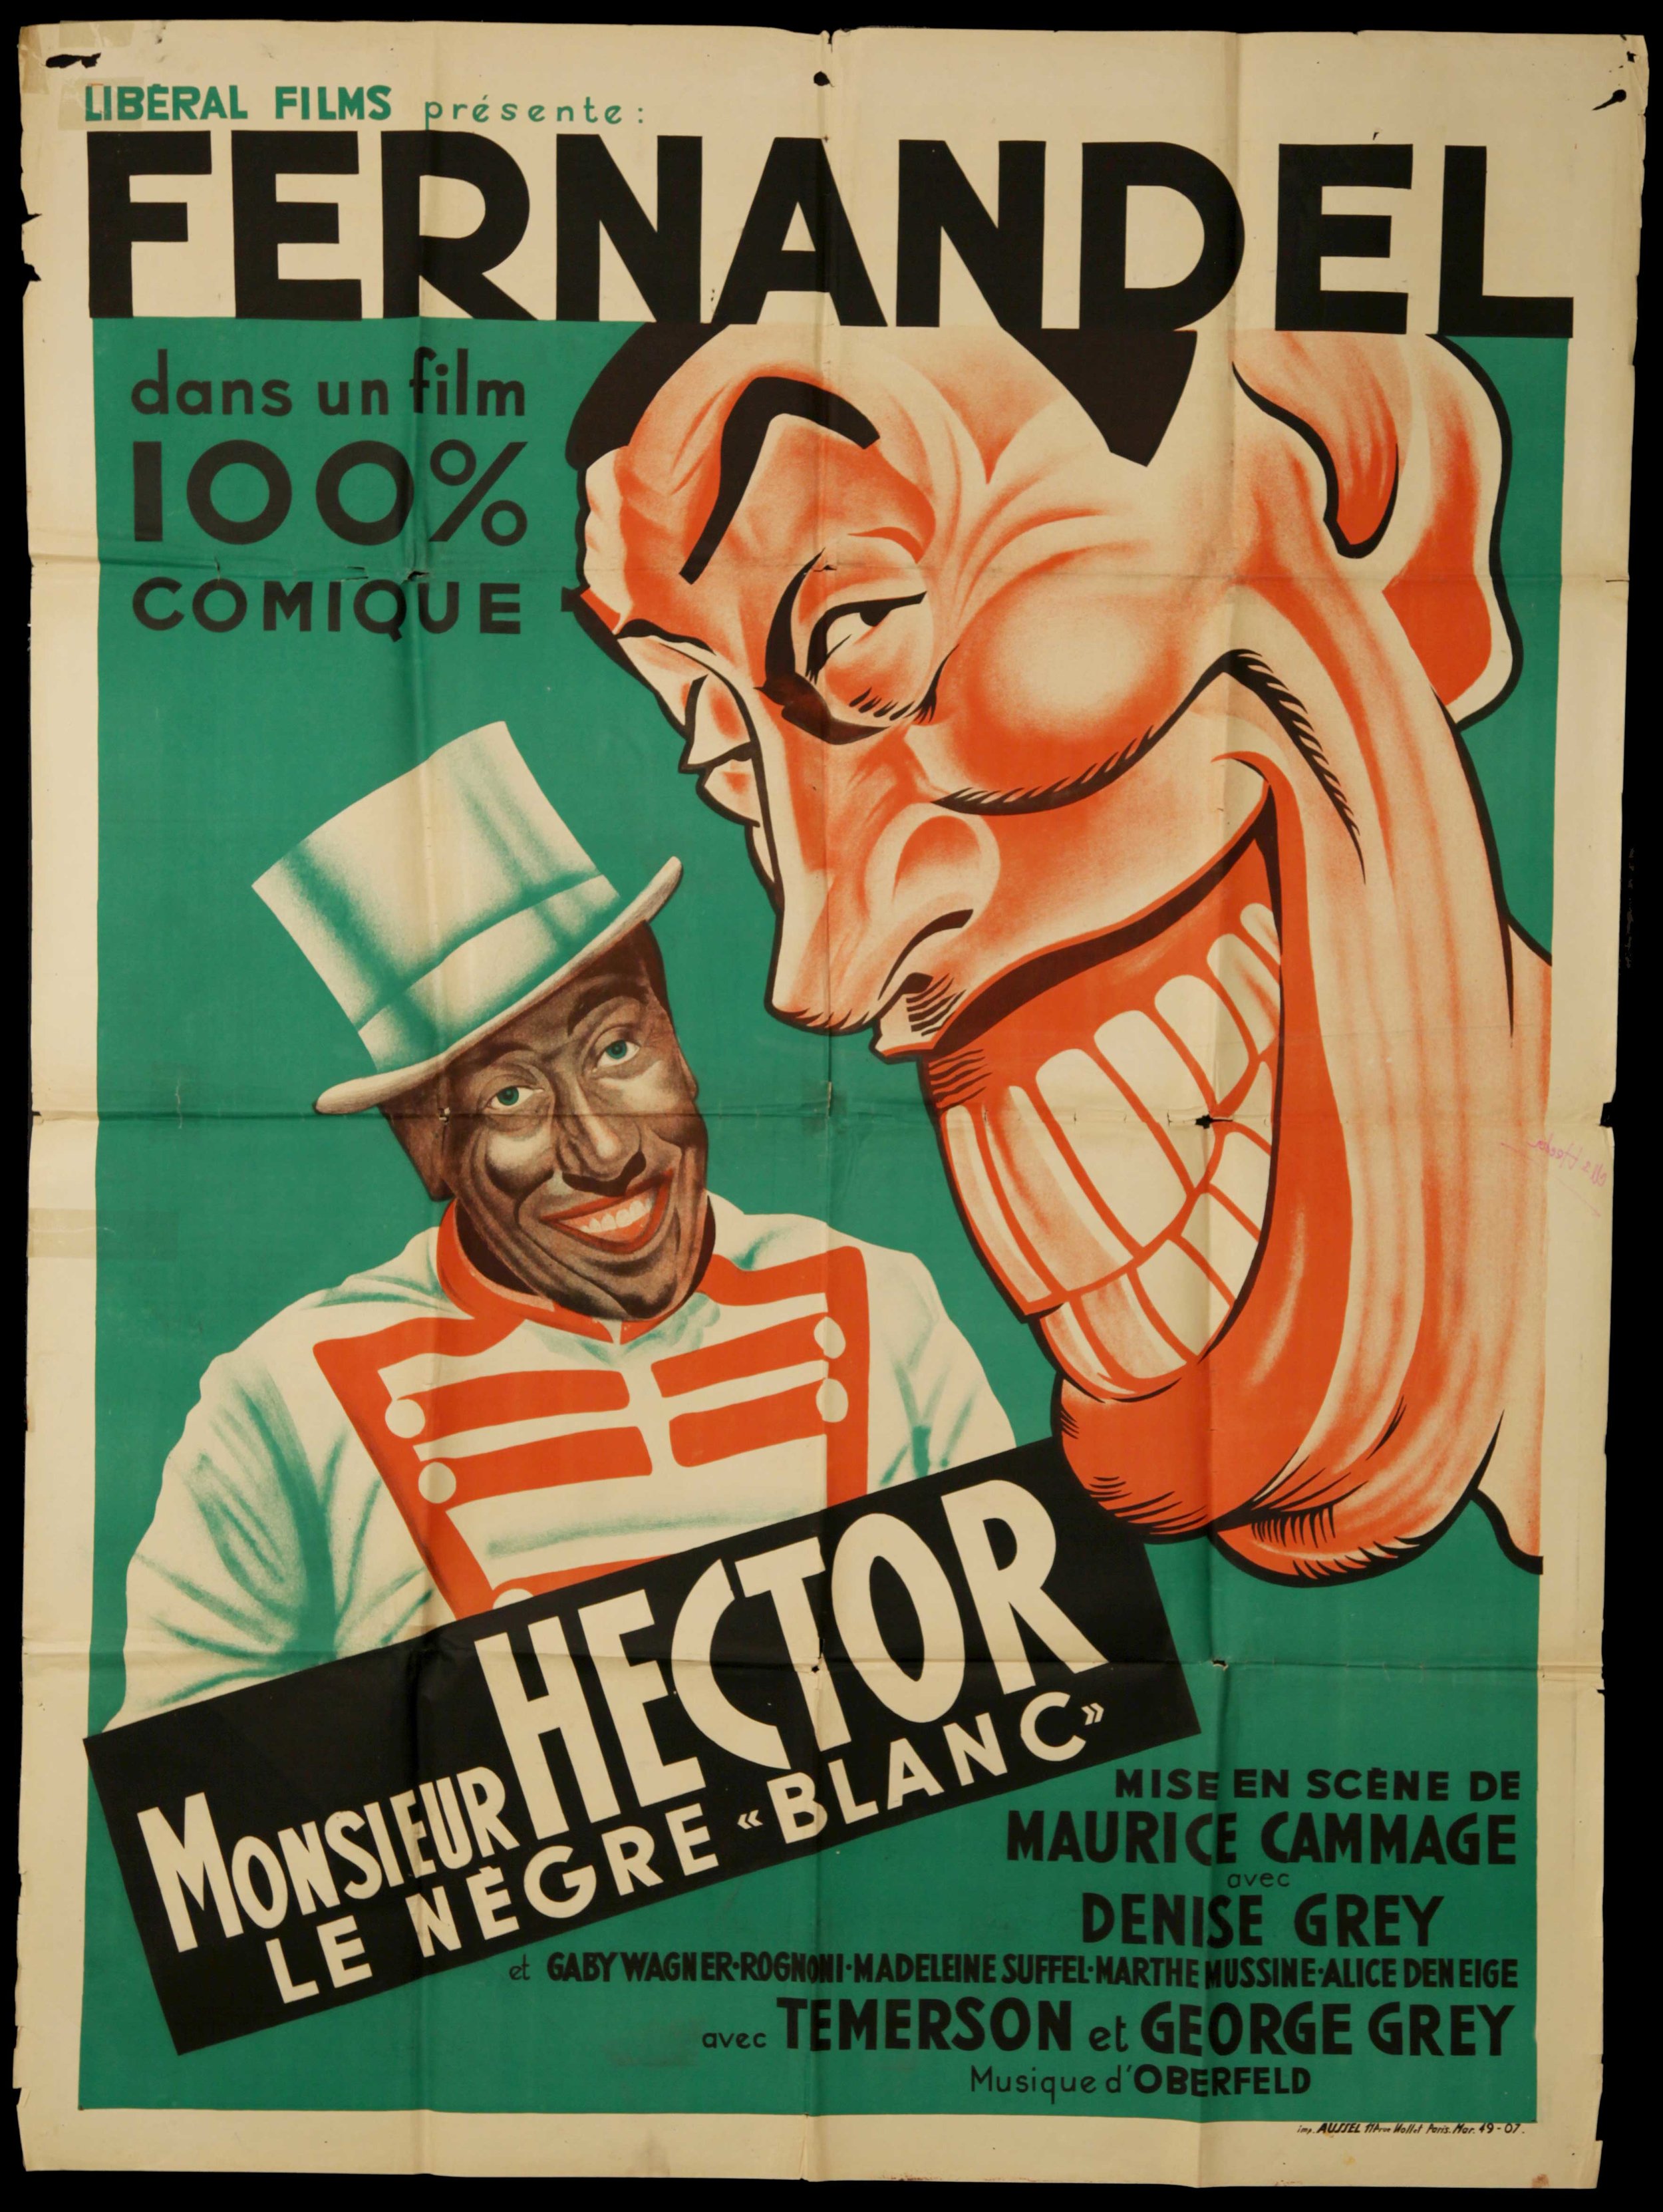 Fernadel in "Monsieur Hector Le Negre Blanc" (1940)